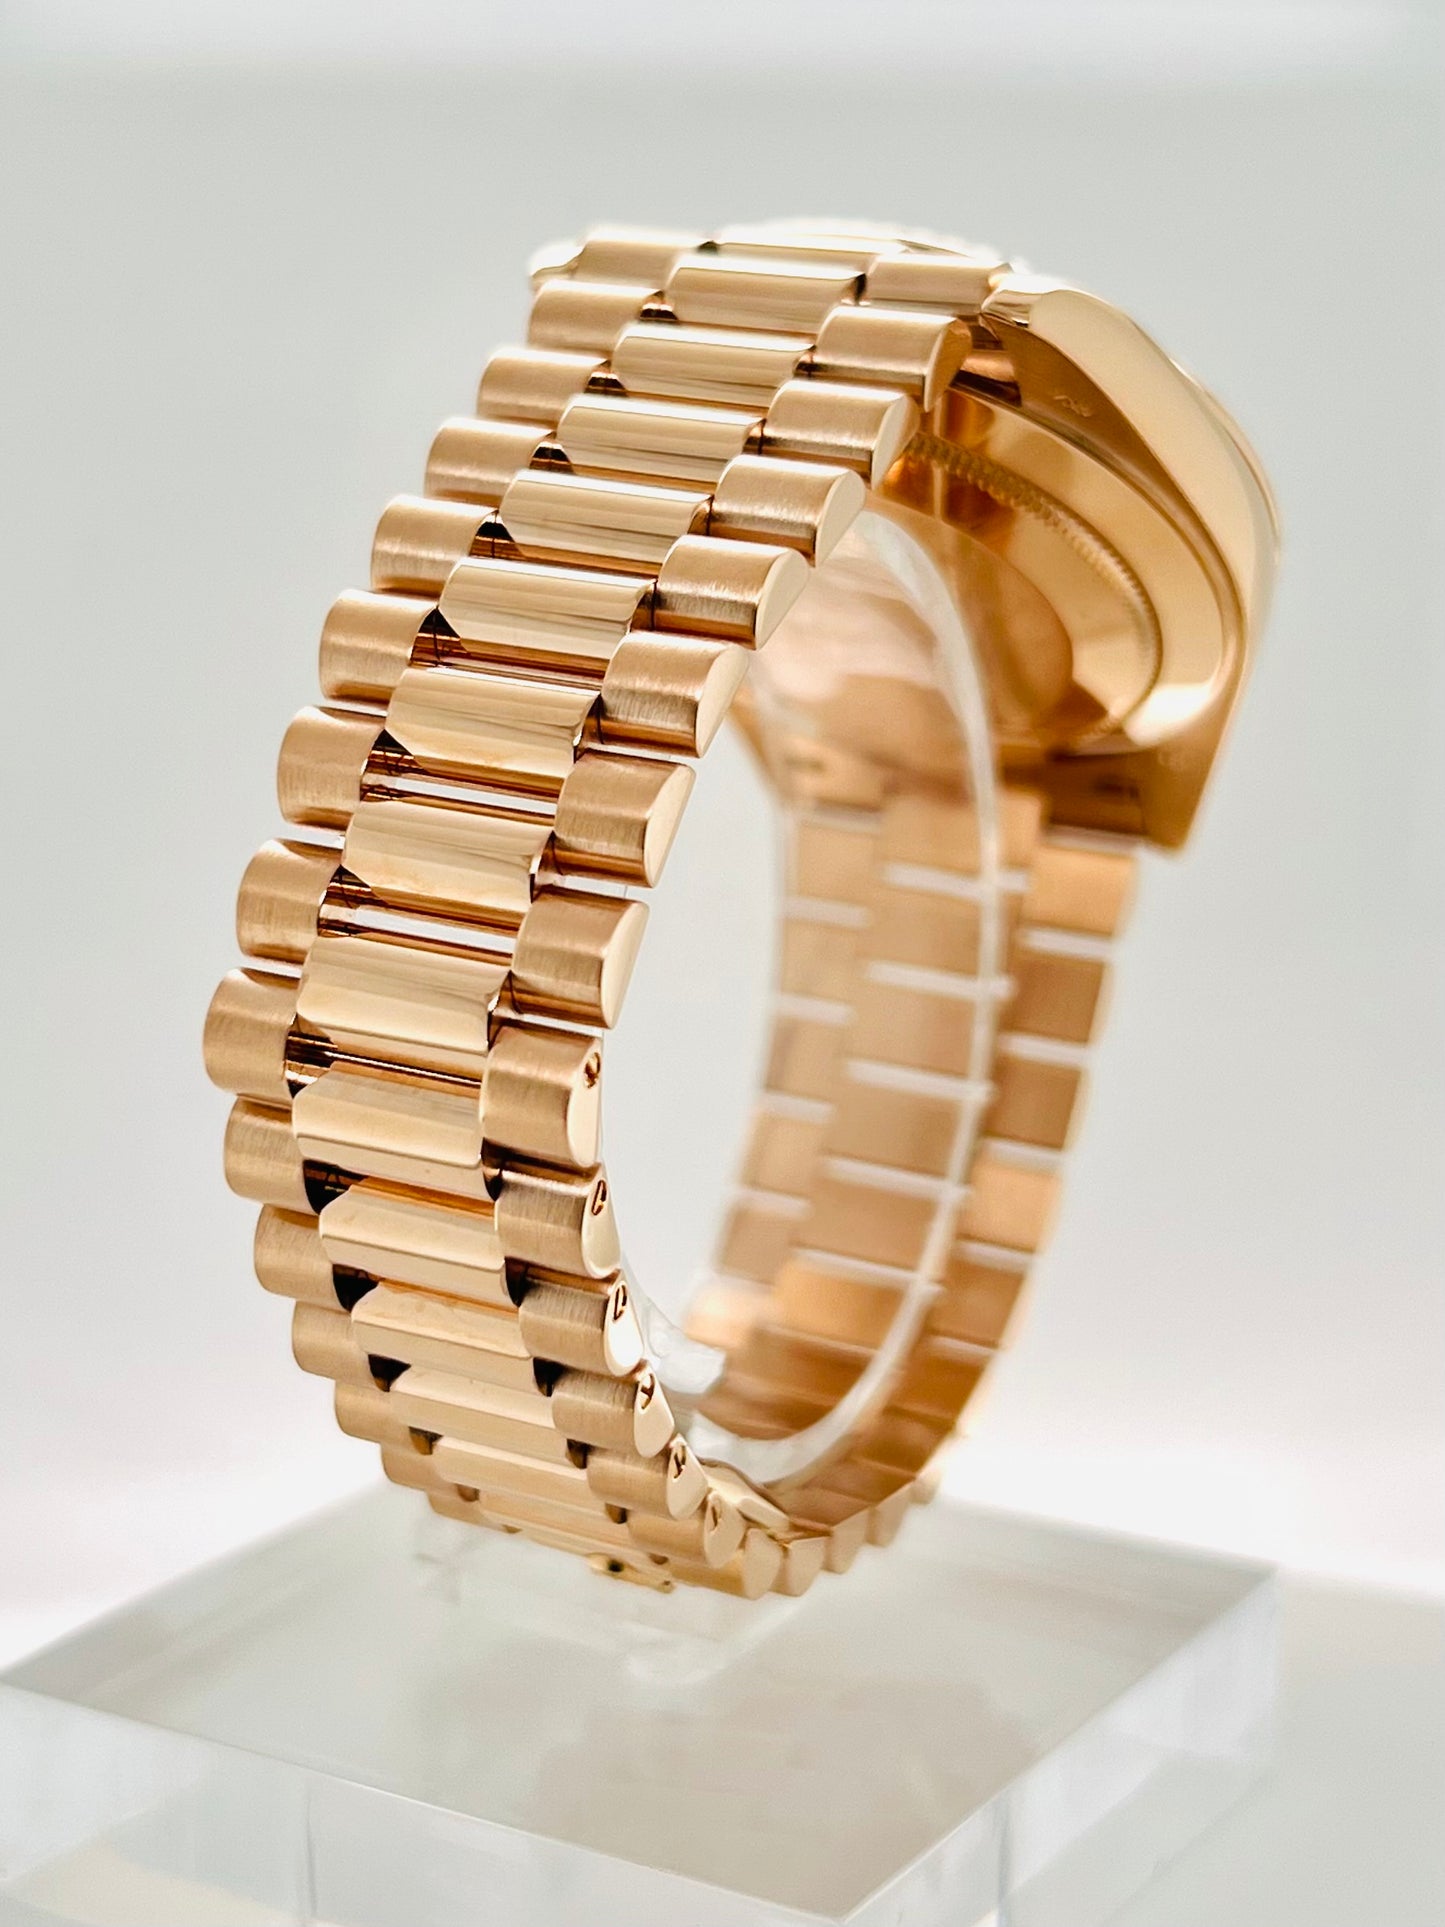 Rolex Day-Date 40mm Rose Gold Men's Watch Model # 228235